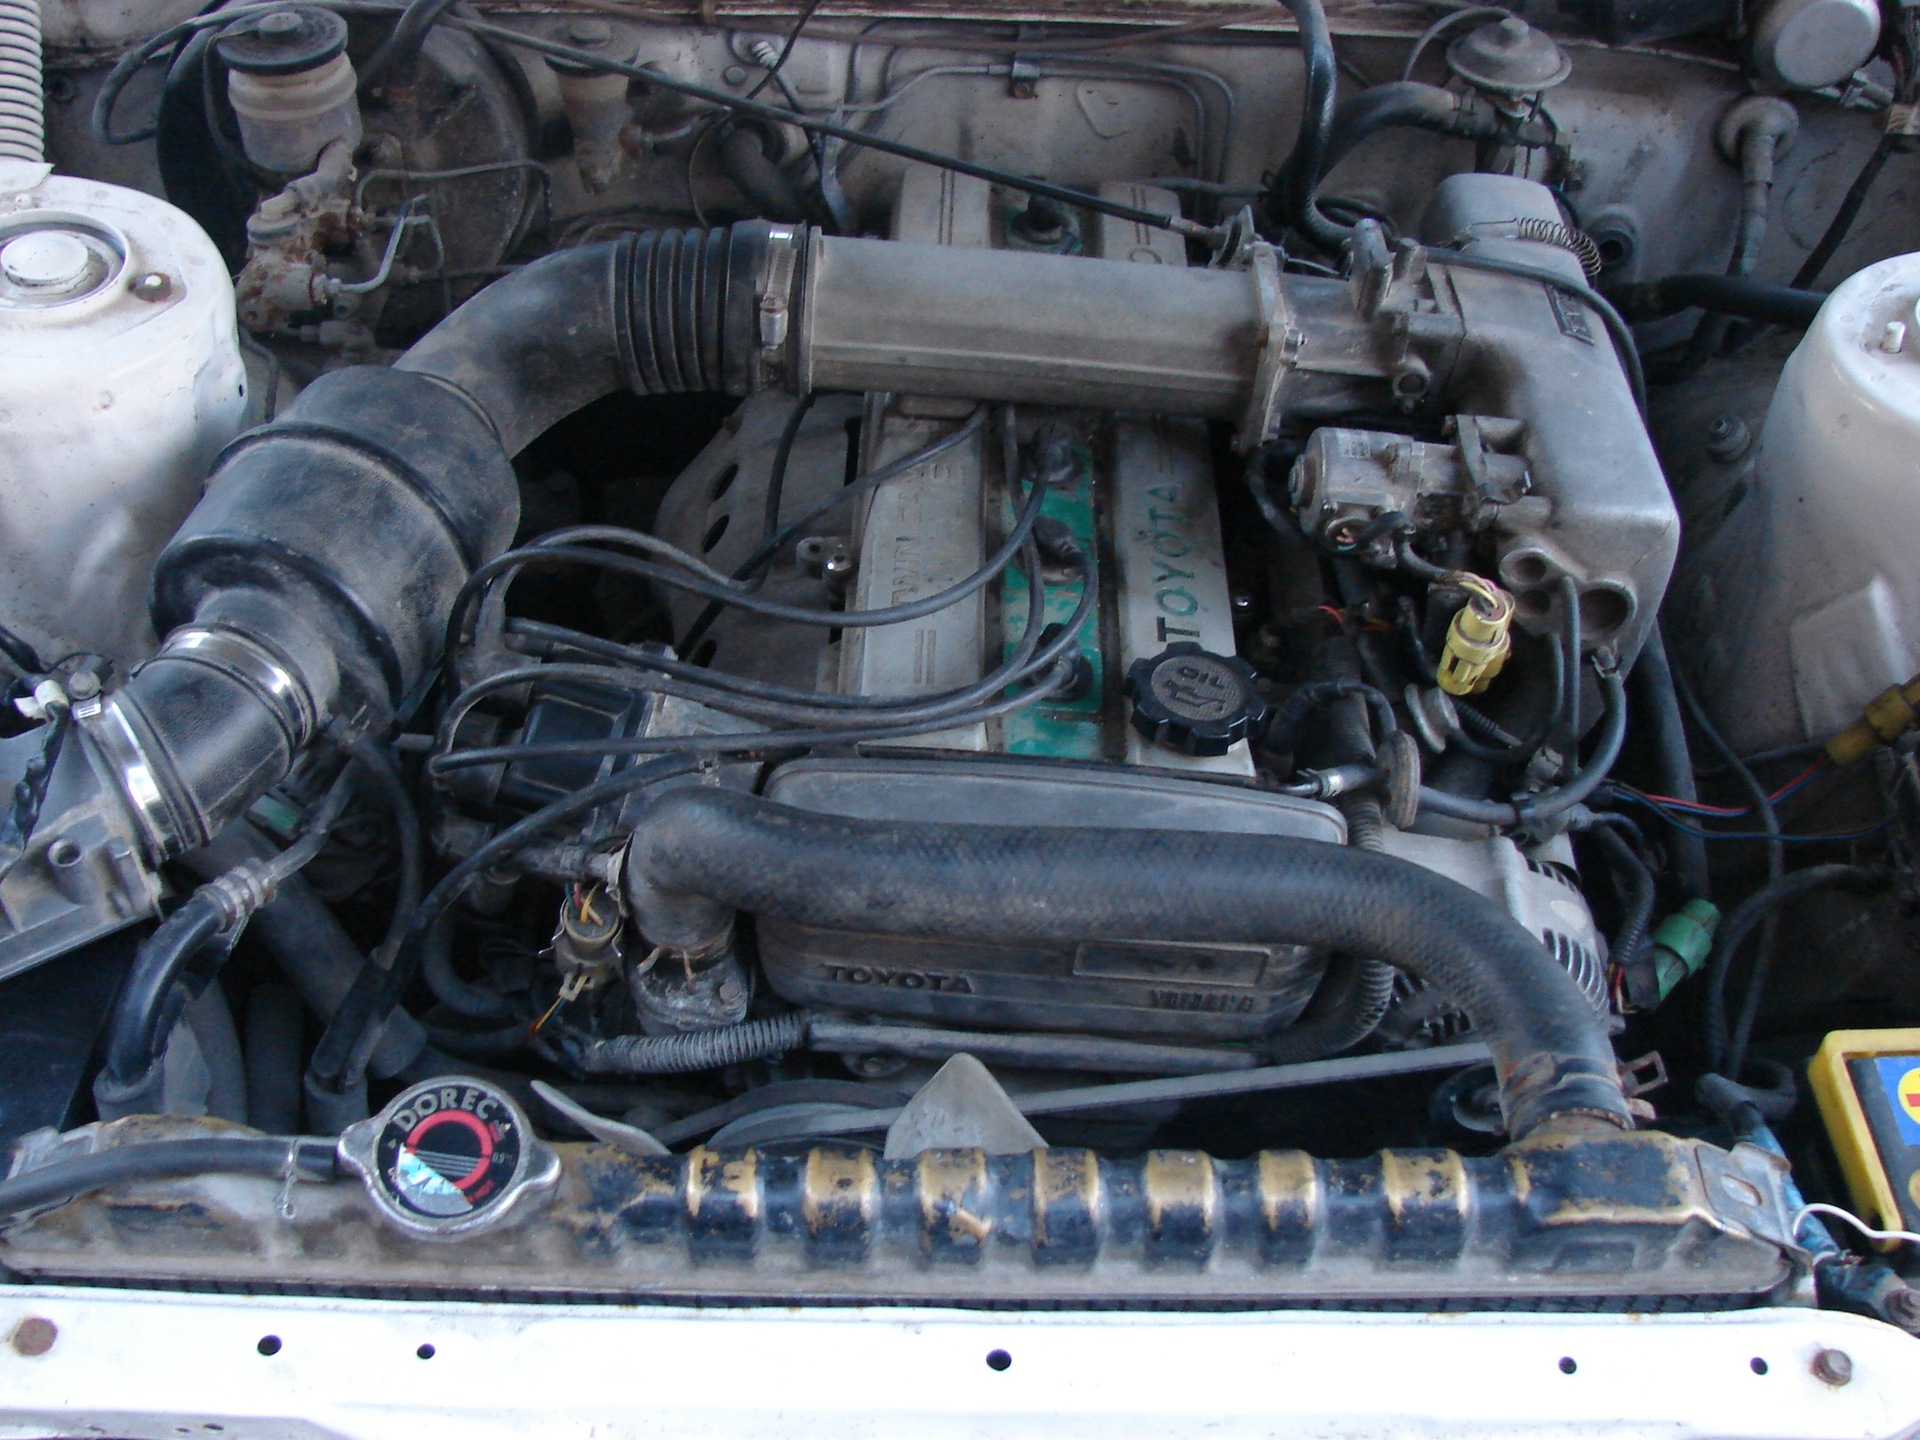 Start of restoration - Toyota Cresta 20 L 1984